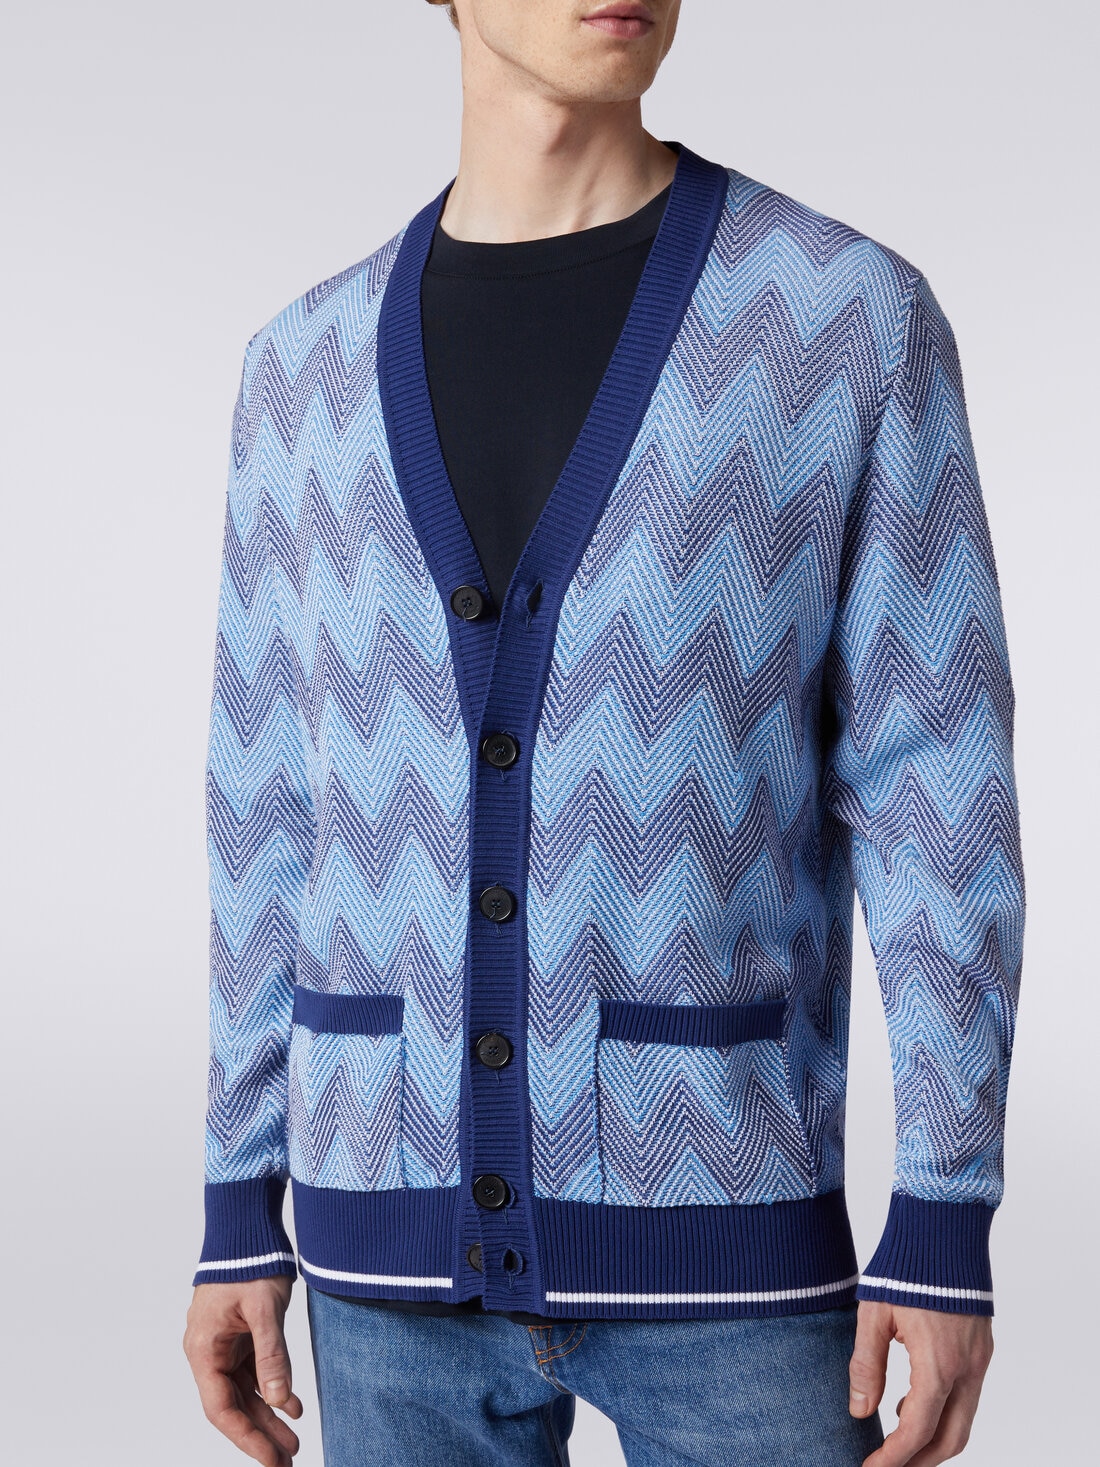 Cardigan in chevron cotton knit with contrasting trim, Blue - US24SM07BK034YS72F8 - 4